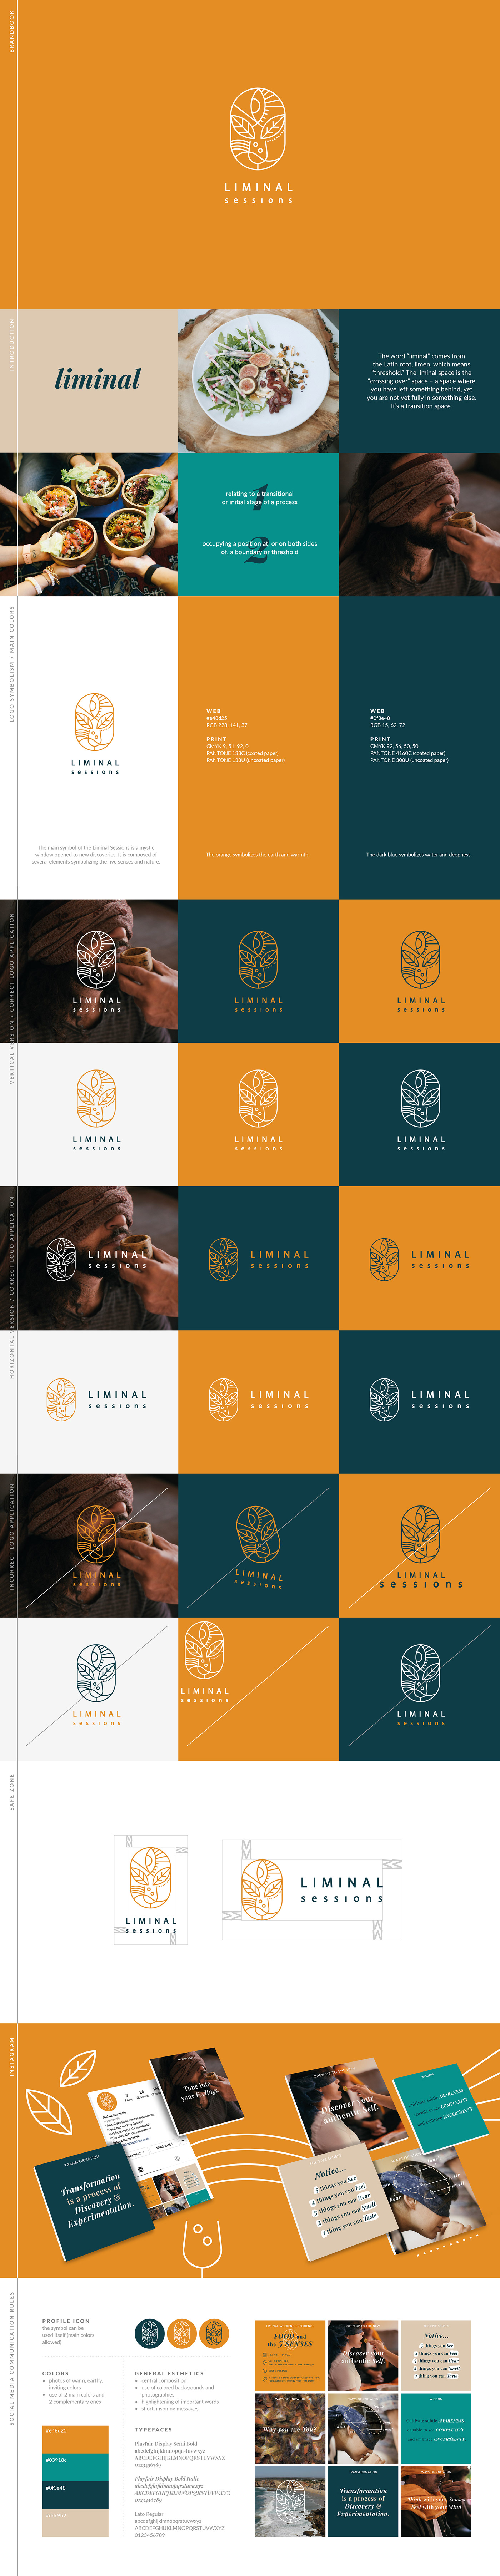 branding  fivesenses liminal Logotype sessions